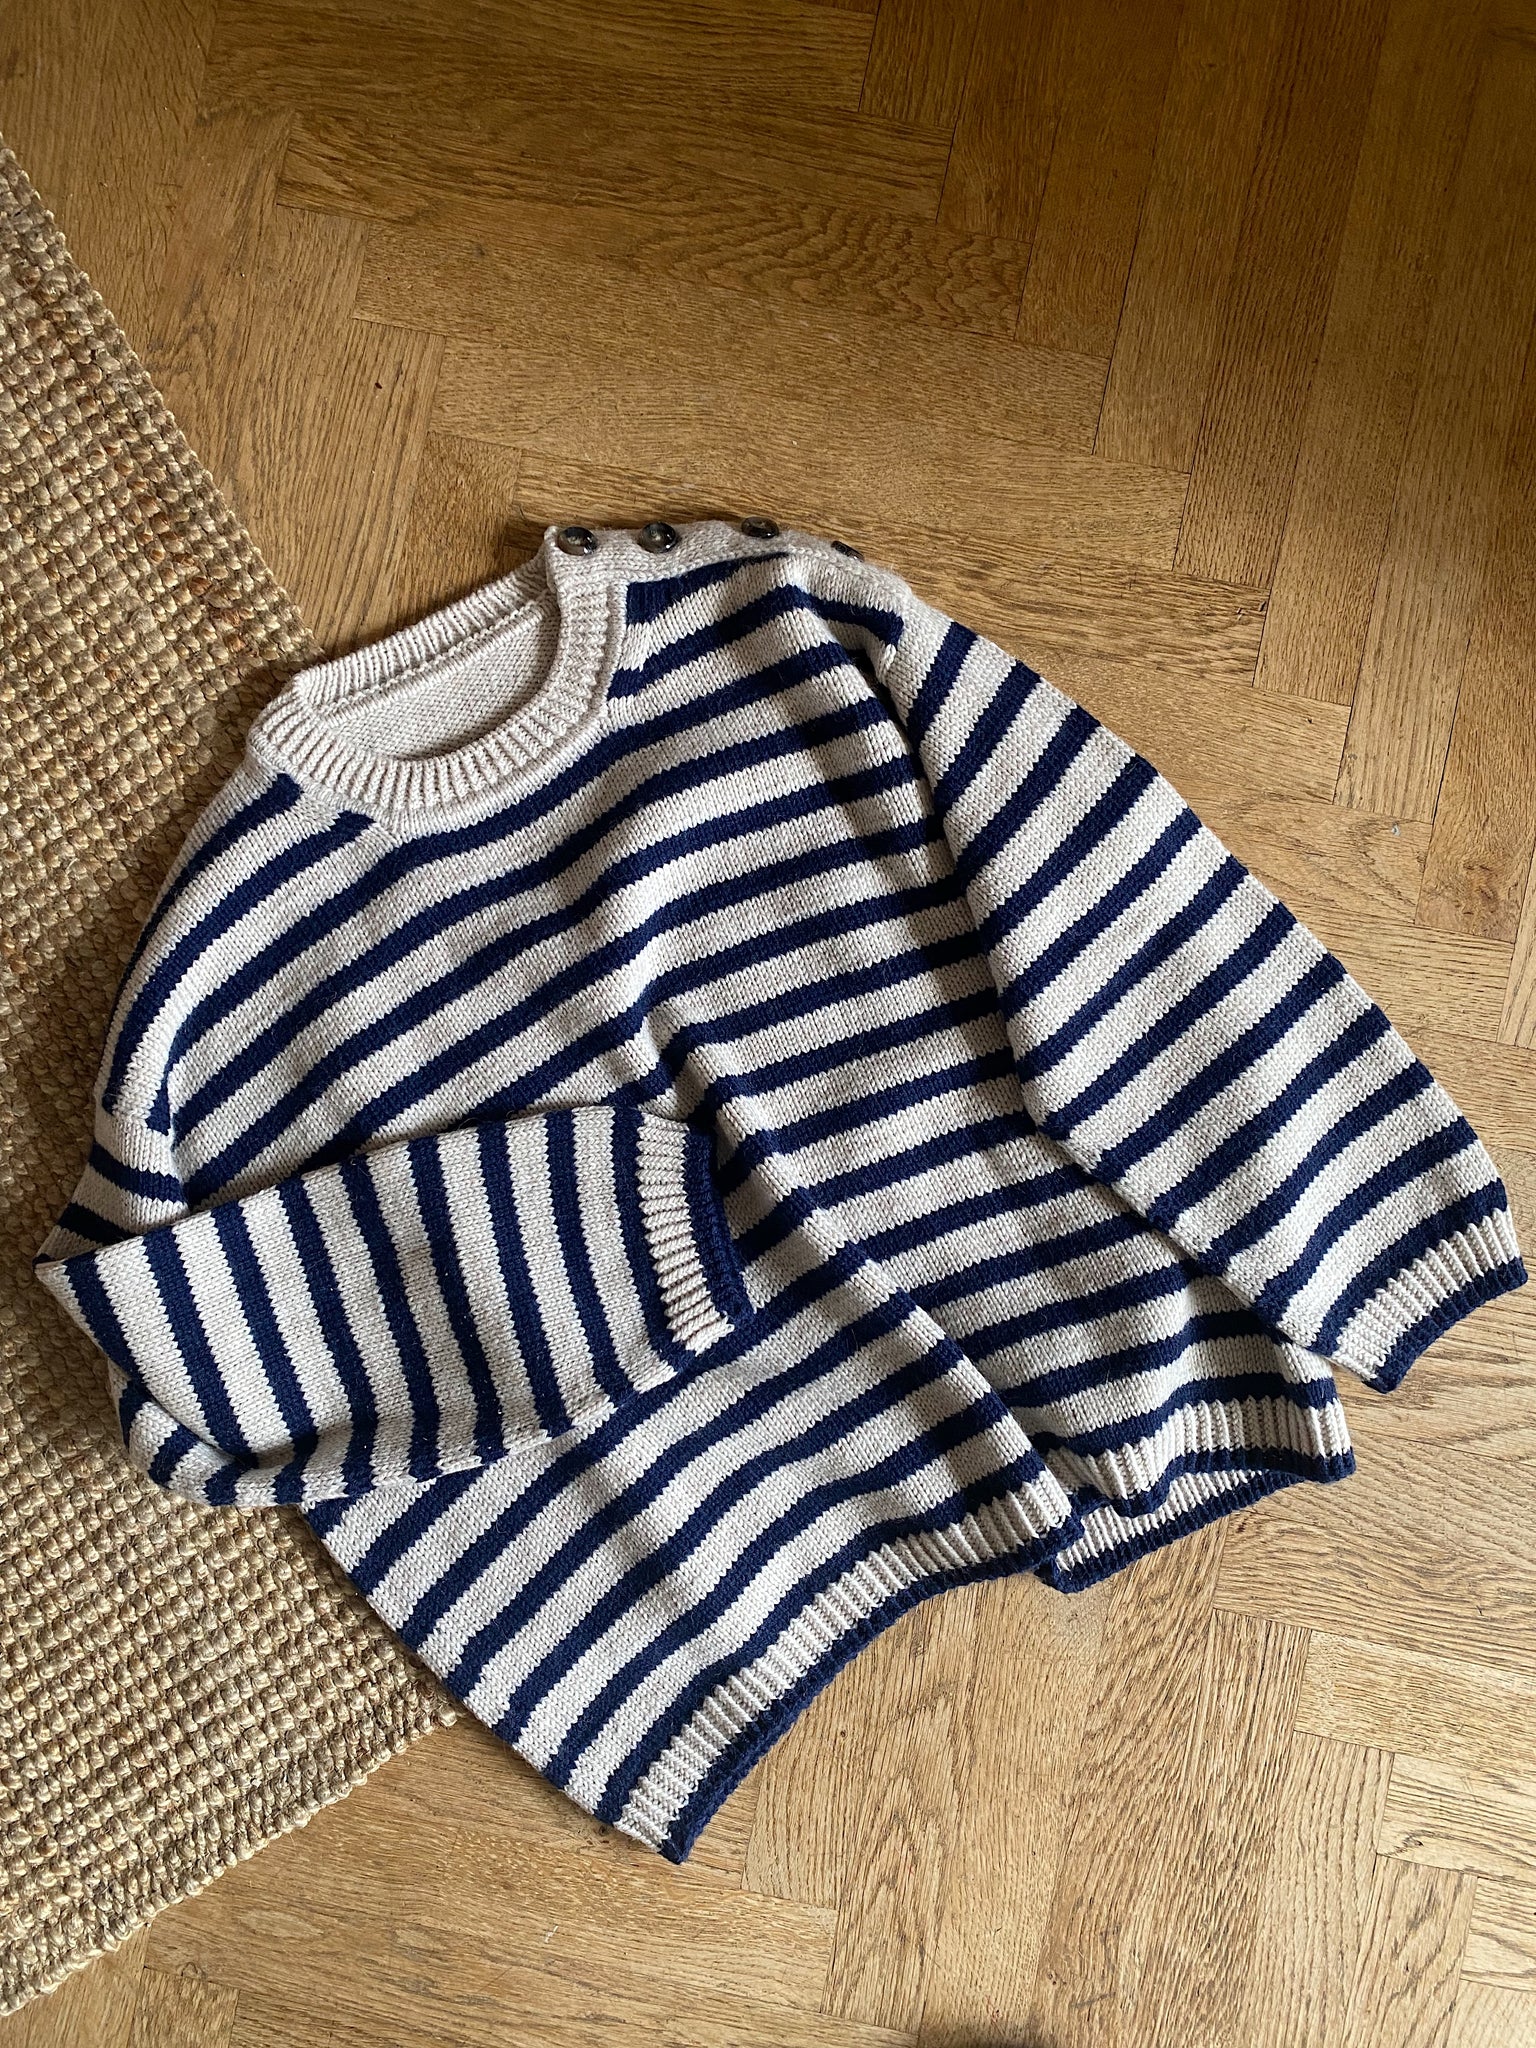 Sweater No. 22 - Knitting Pattern in English – • MY FAVOURITE 